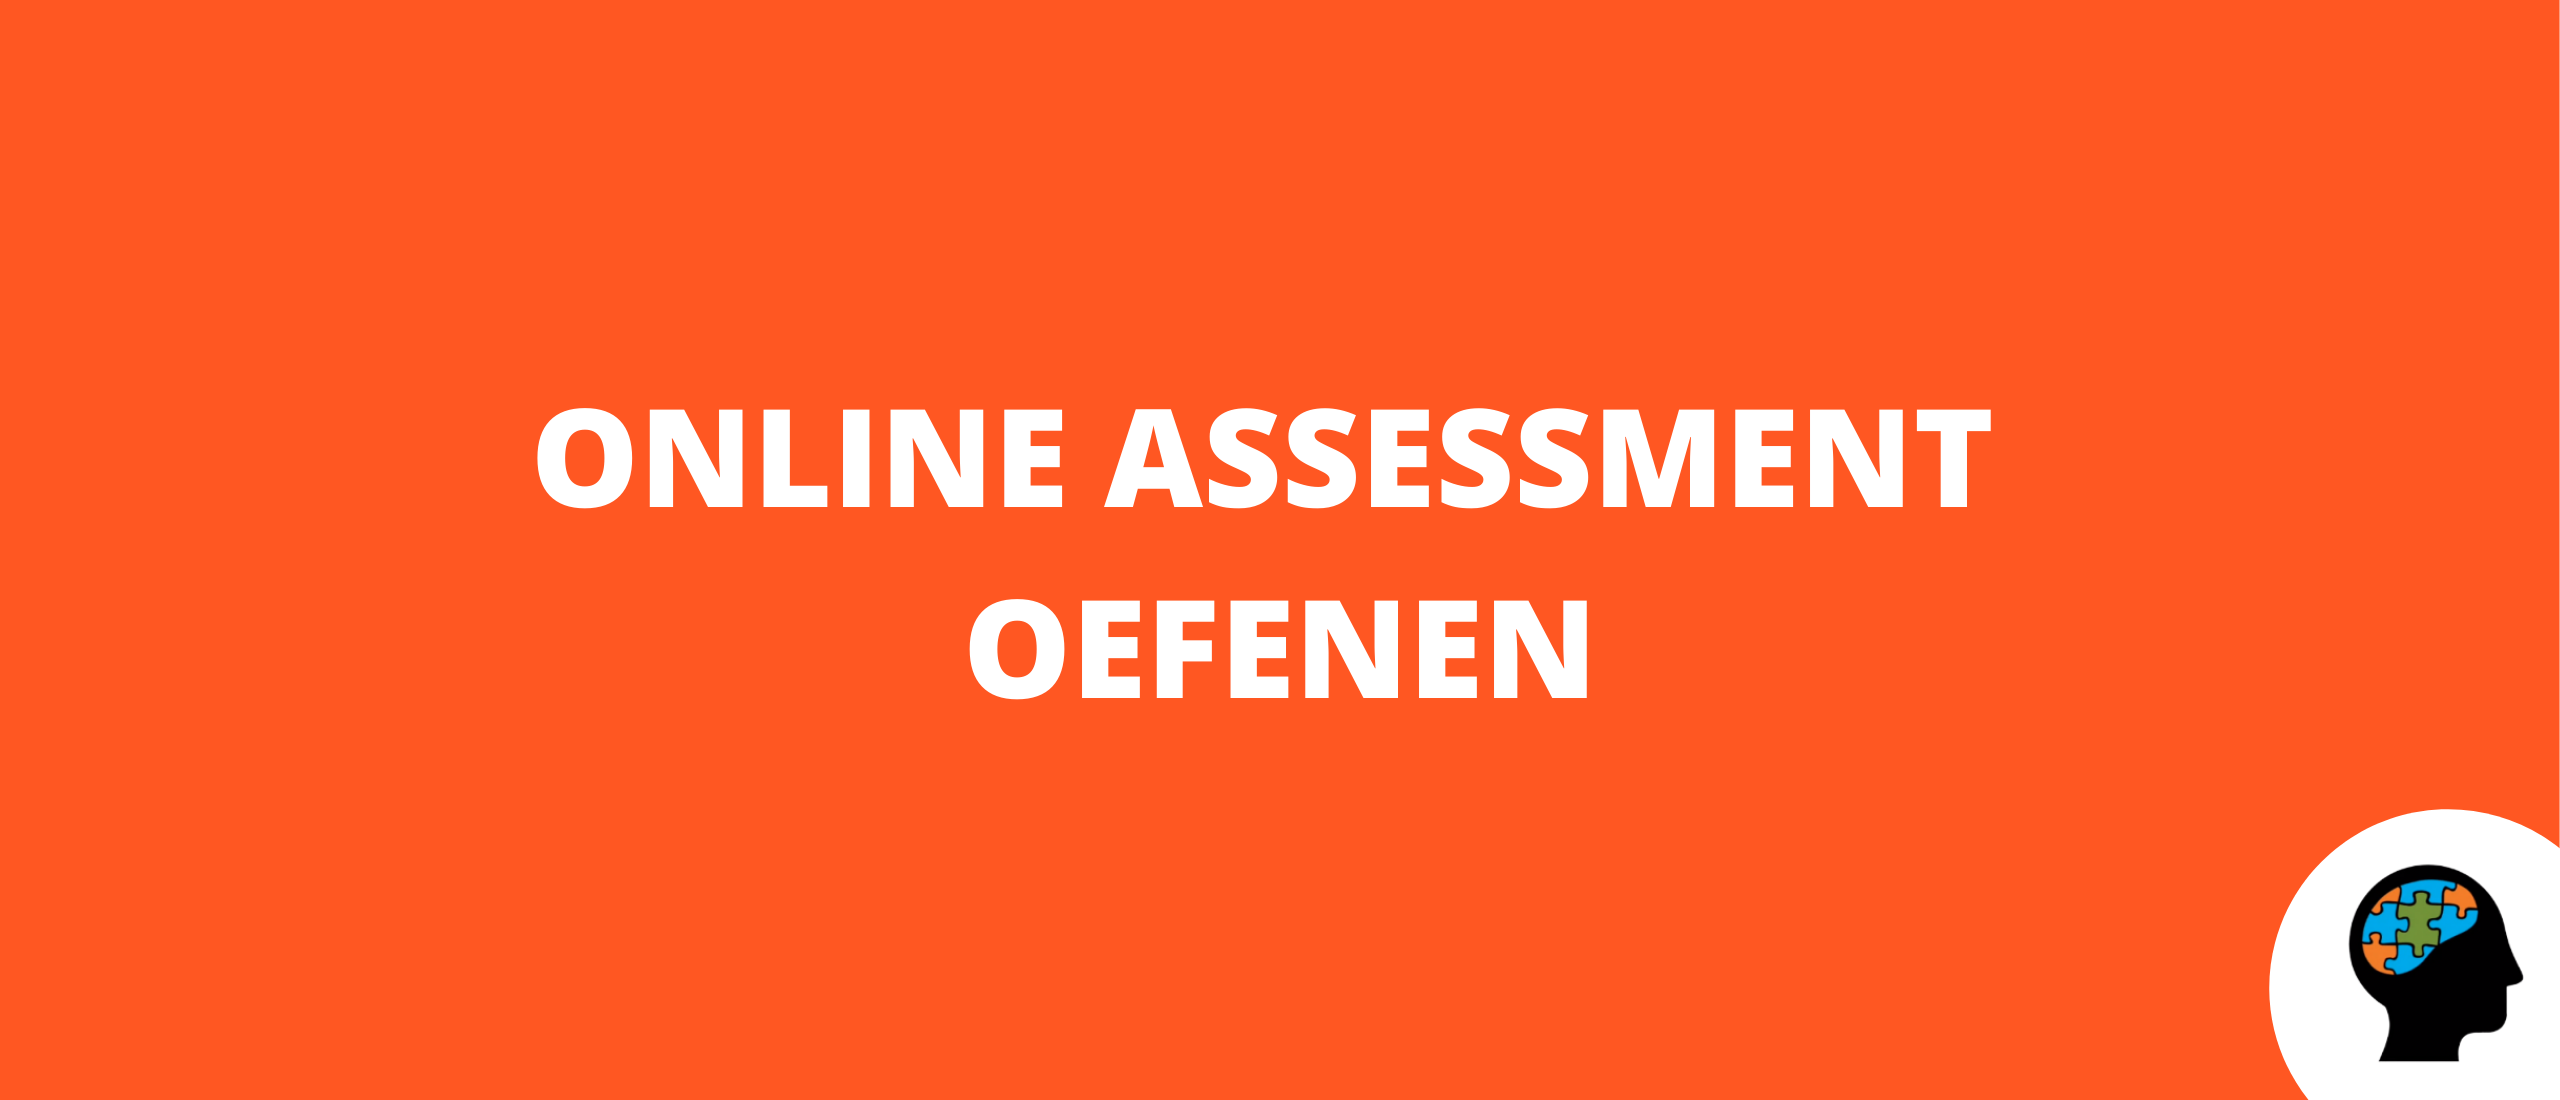 Online assessment oefenen